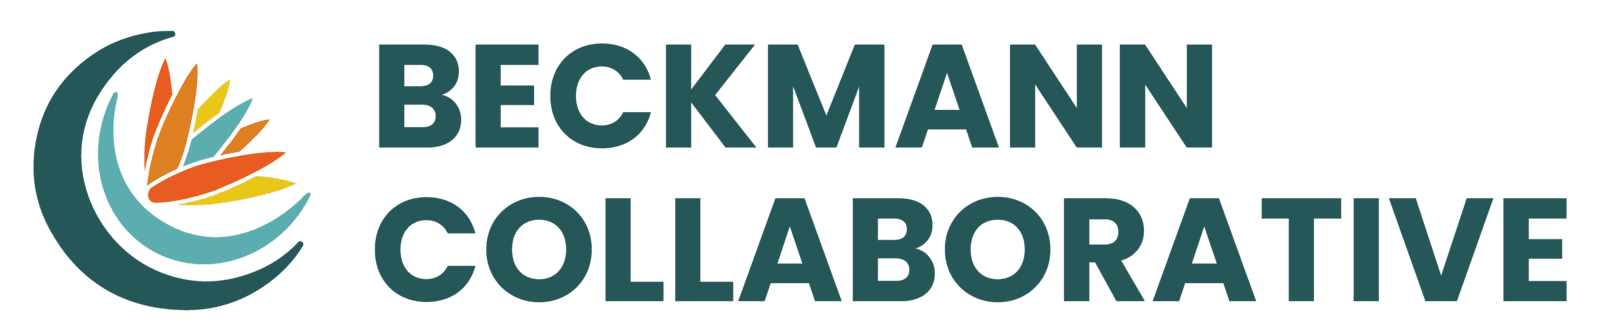 Beckmann Collaborative